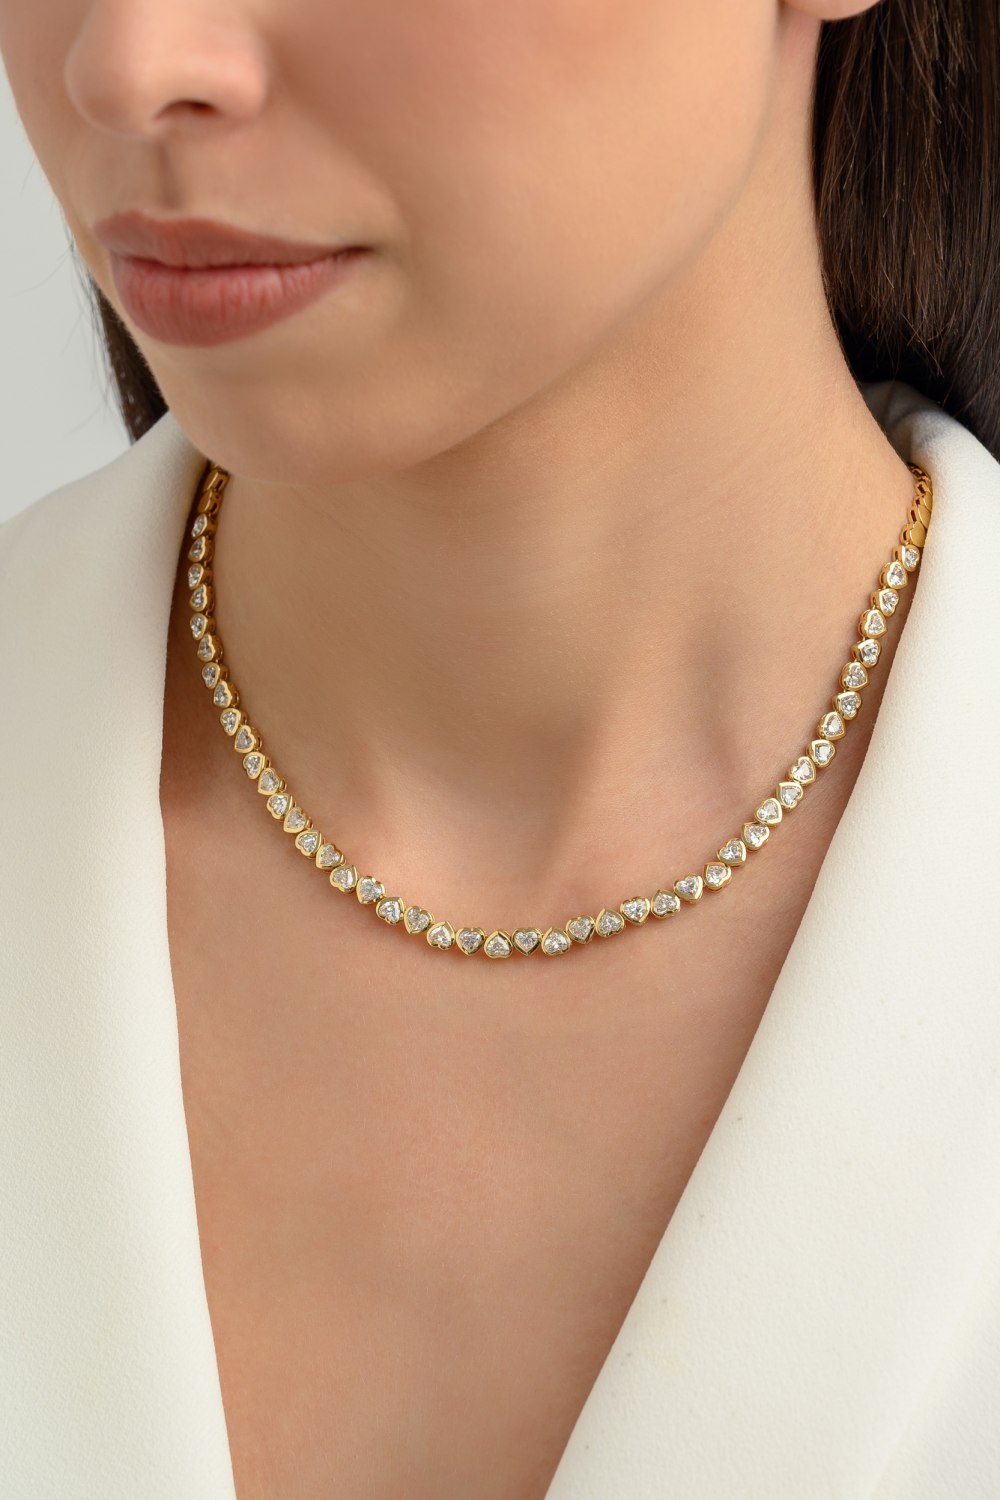 SWAROVSKI Crystal VIO Princess Necklace #5192265 White & Rose Gold 15.75